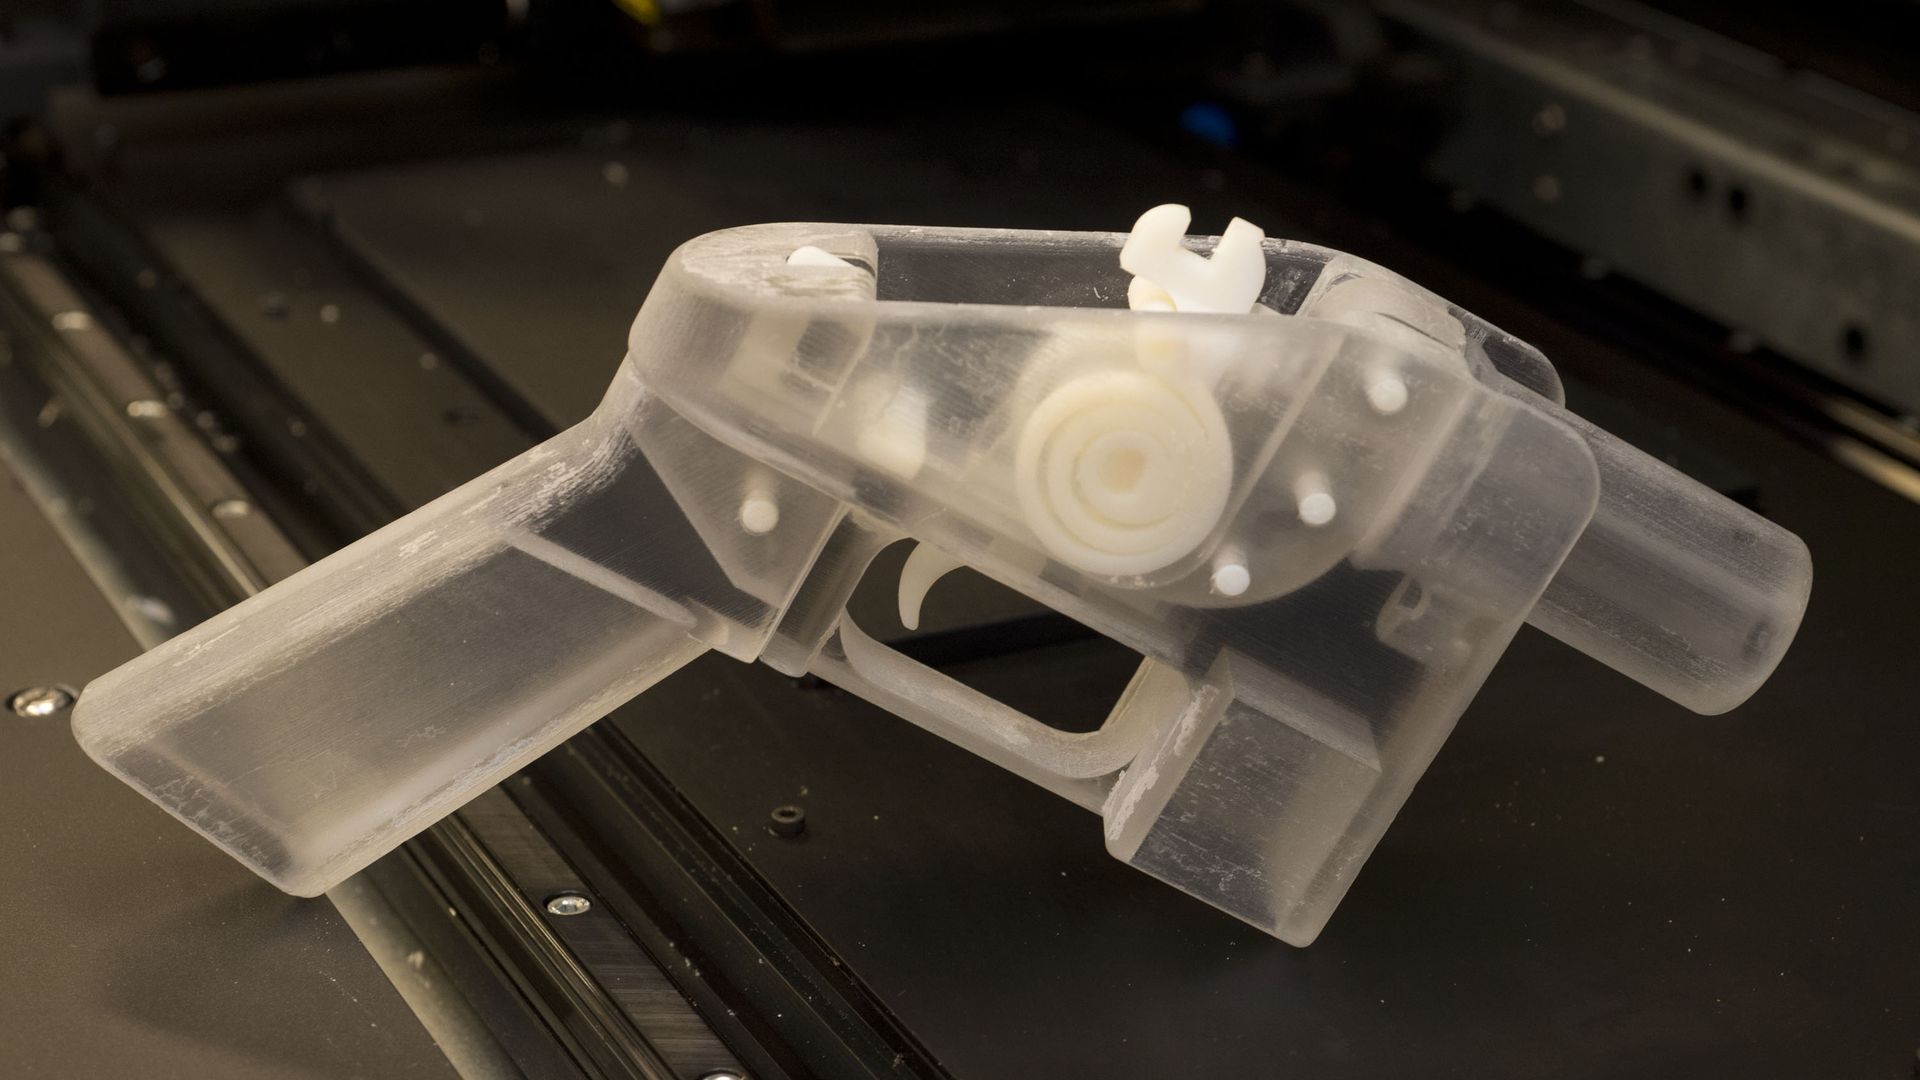 Gun made by a 3D printer. Keith Beaty/Toronto Star via Getty Images